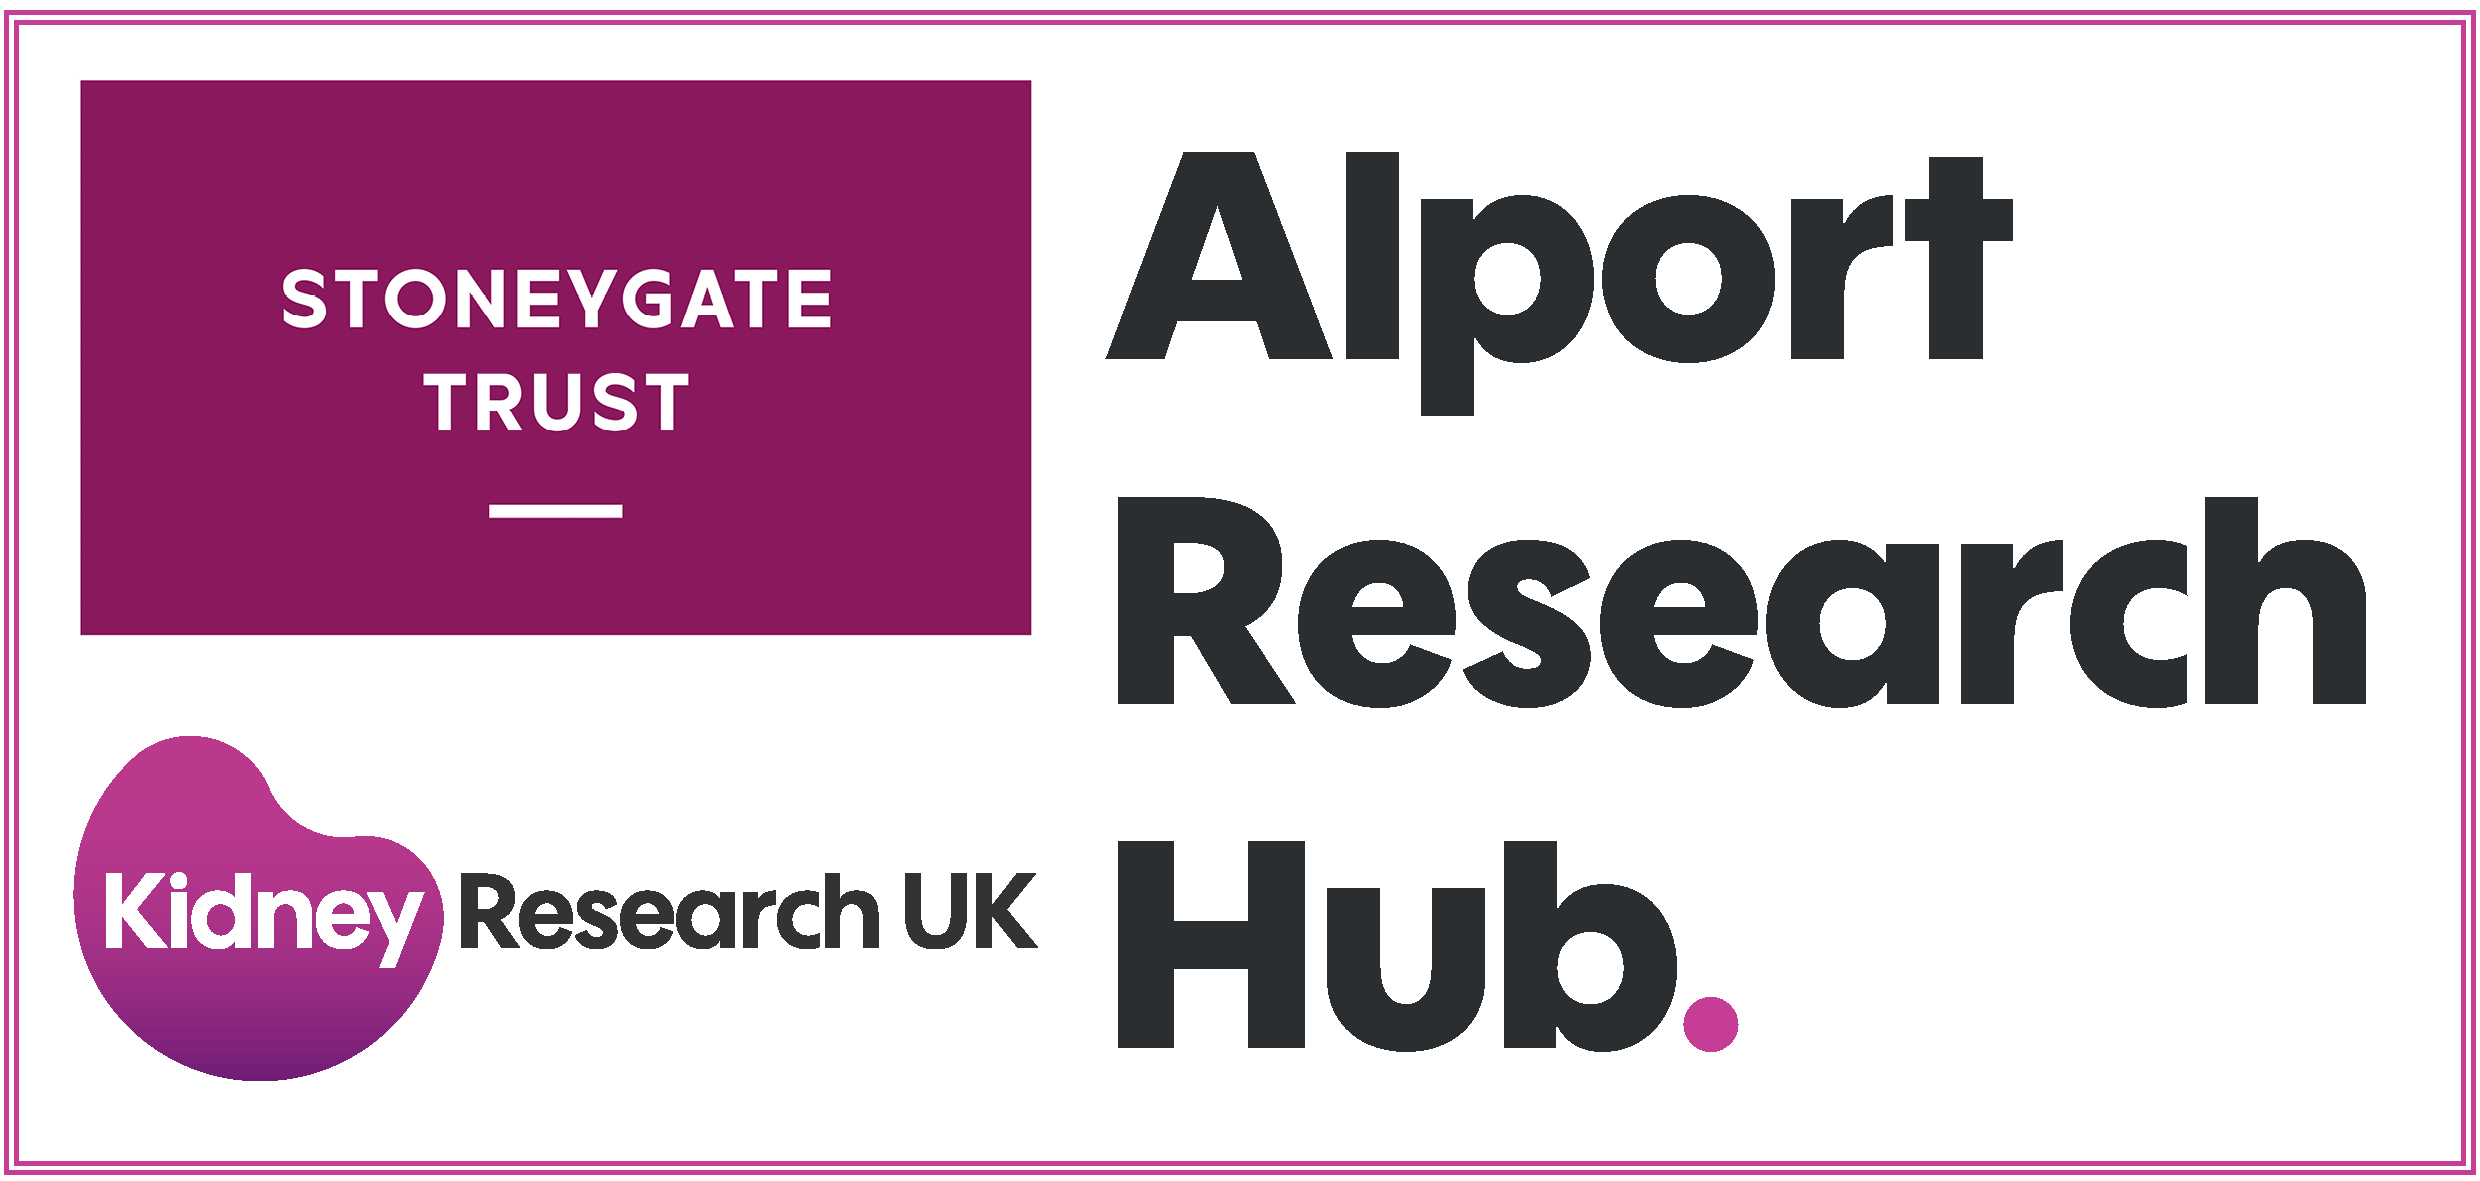 Alport Research Hub logo alongside Stoneygate Trust and Kidney Research UK logos.